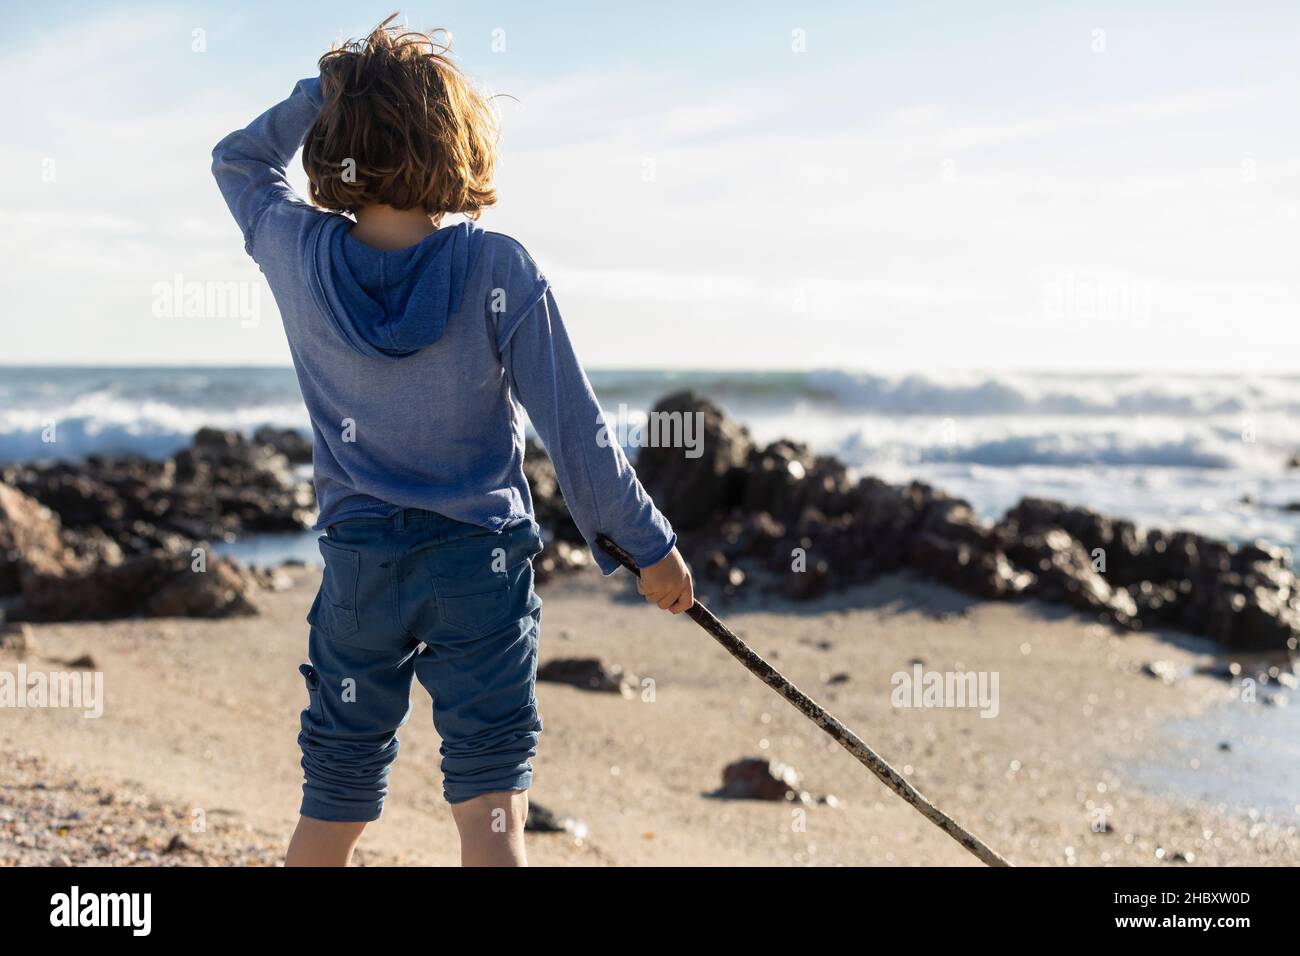 Boy playing on a rocky beach, holding a long kelp seaweed strand Stock Photo